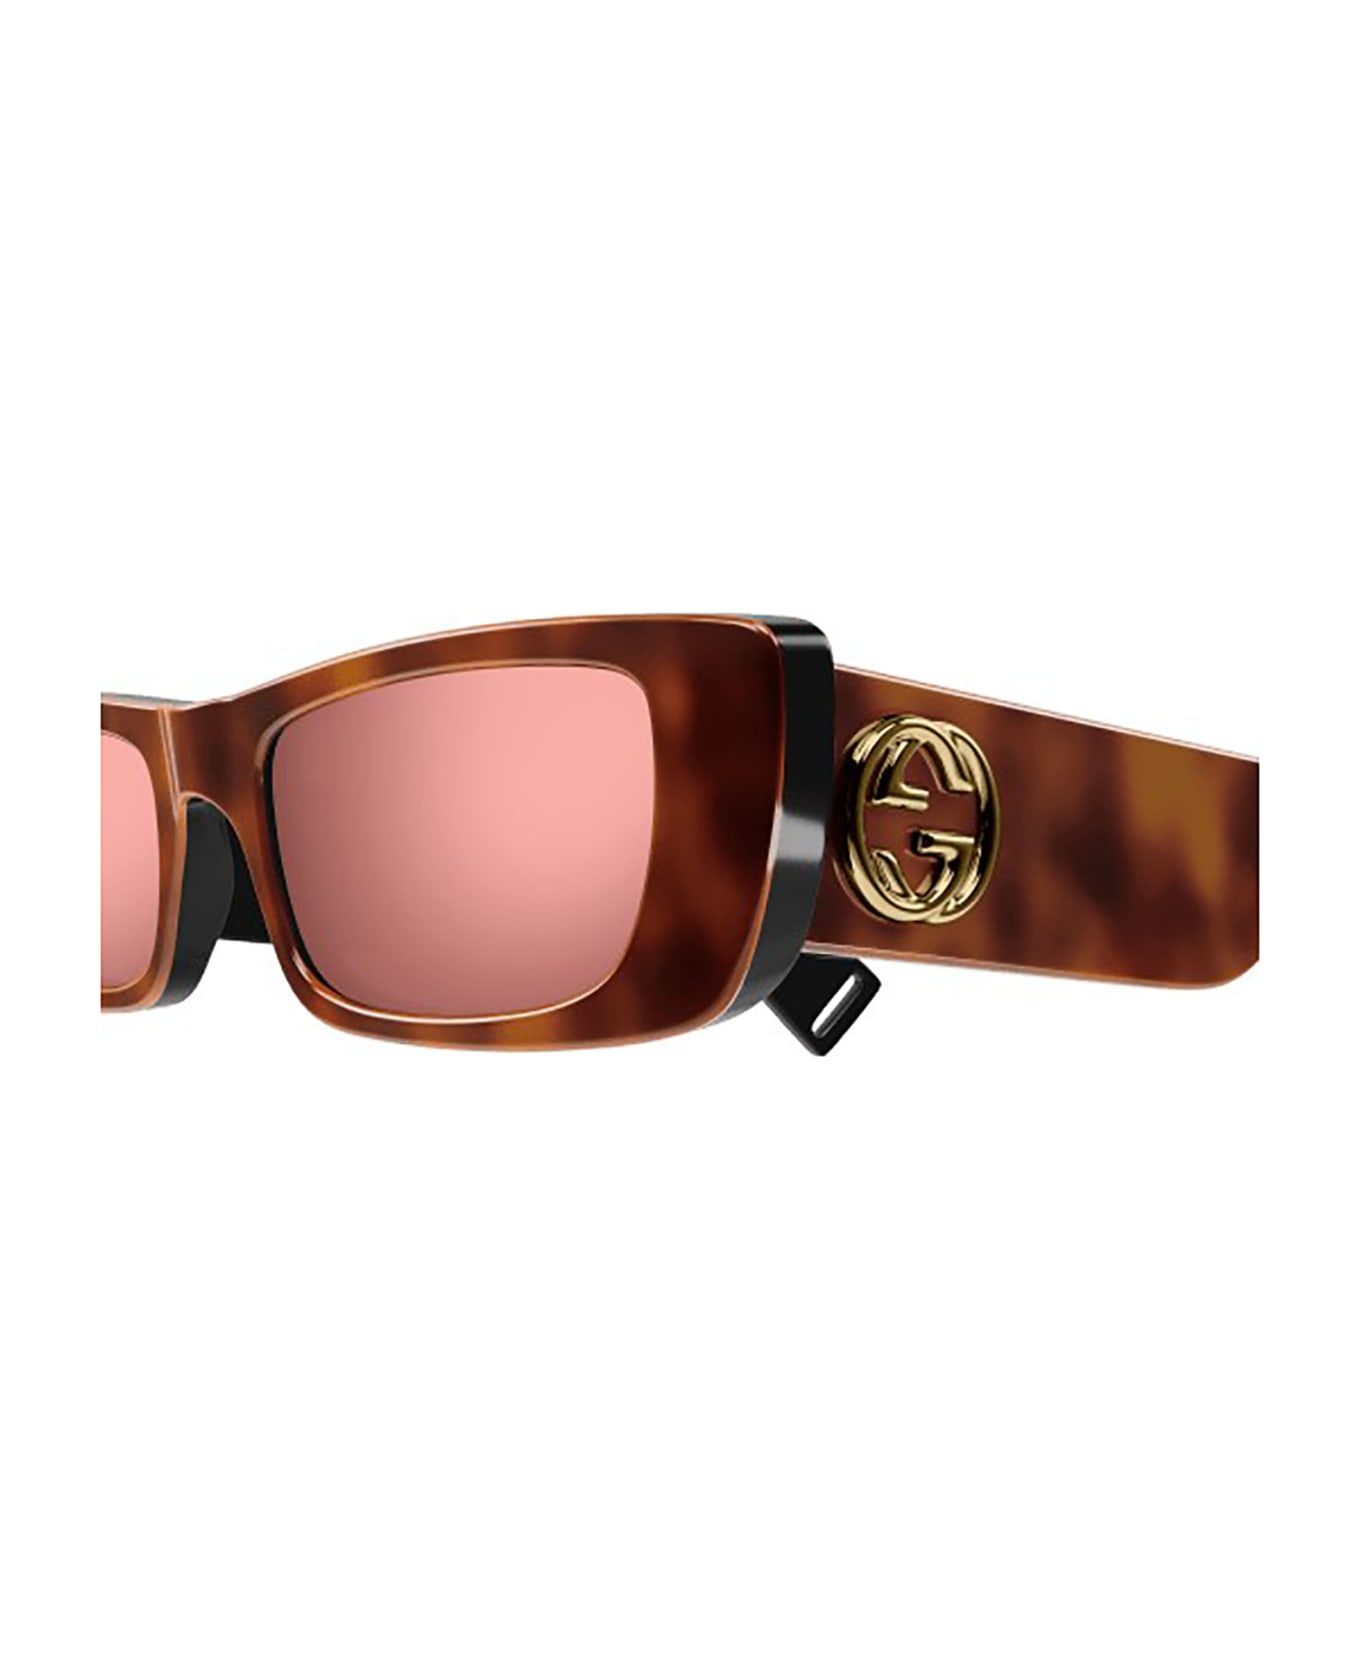 Gucci Eyewear Gg0516s Sunglasses - 015 havana havana red サングラス